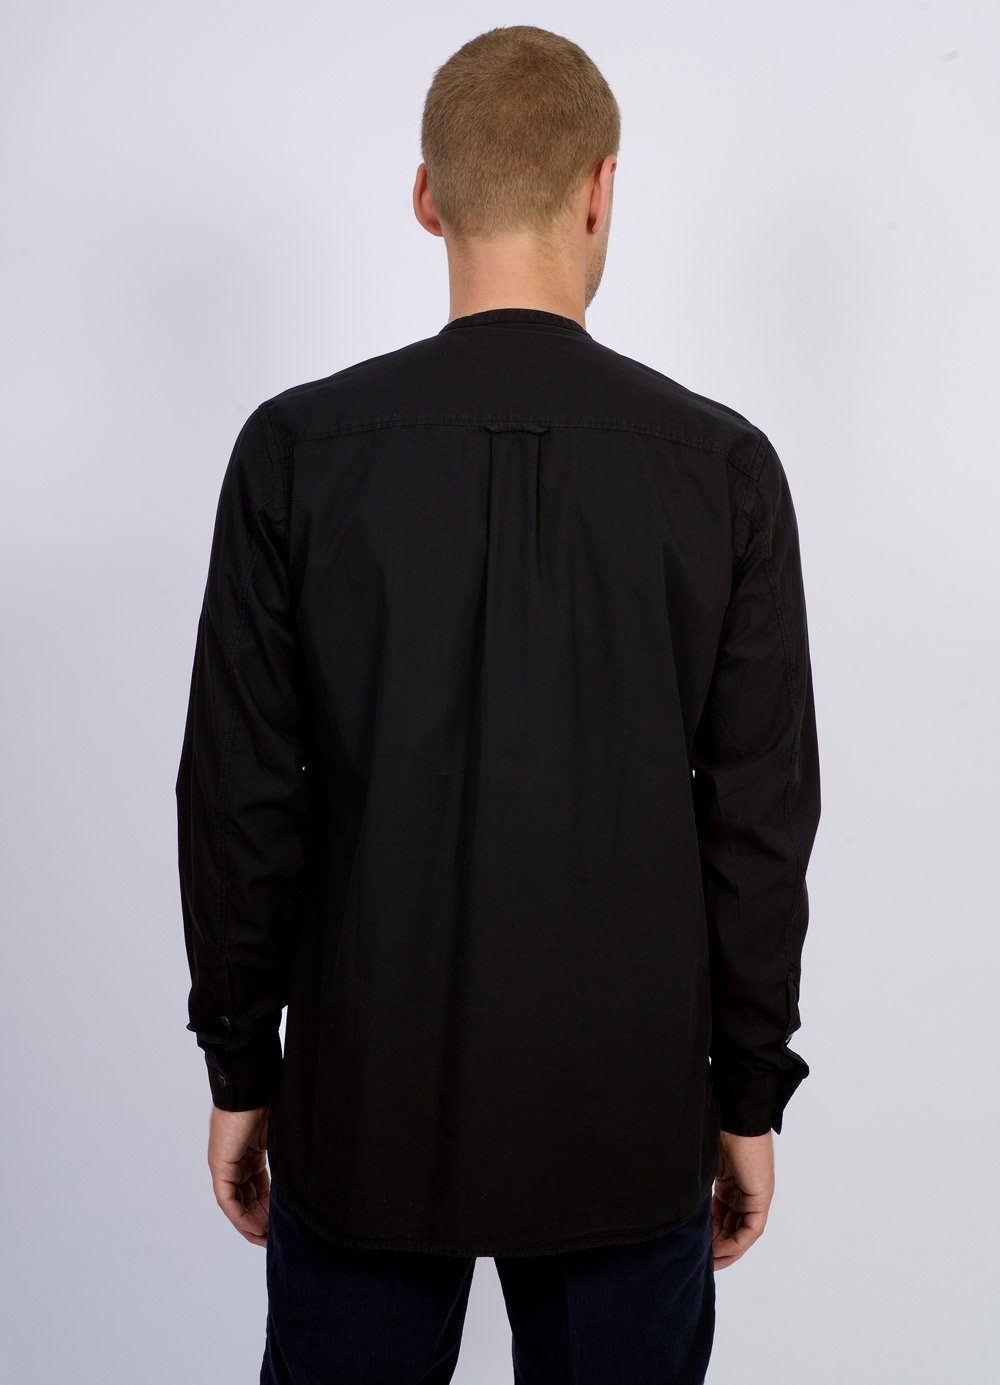 ARTHUR	| Collarless Pull-on Shirt | Black